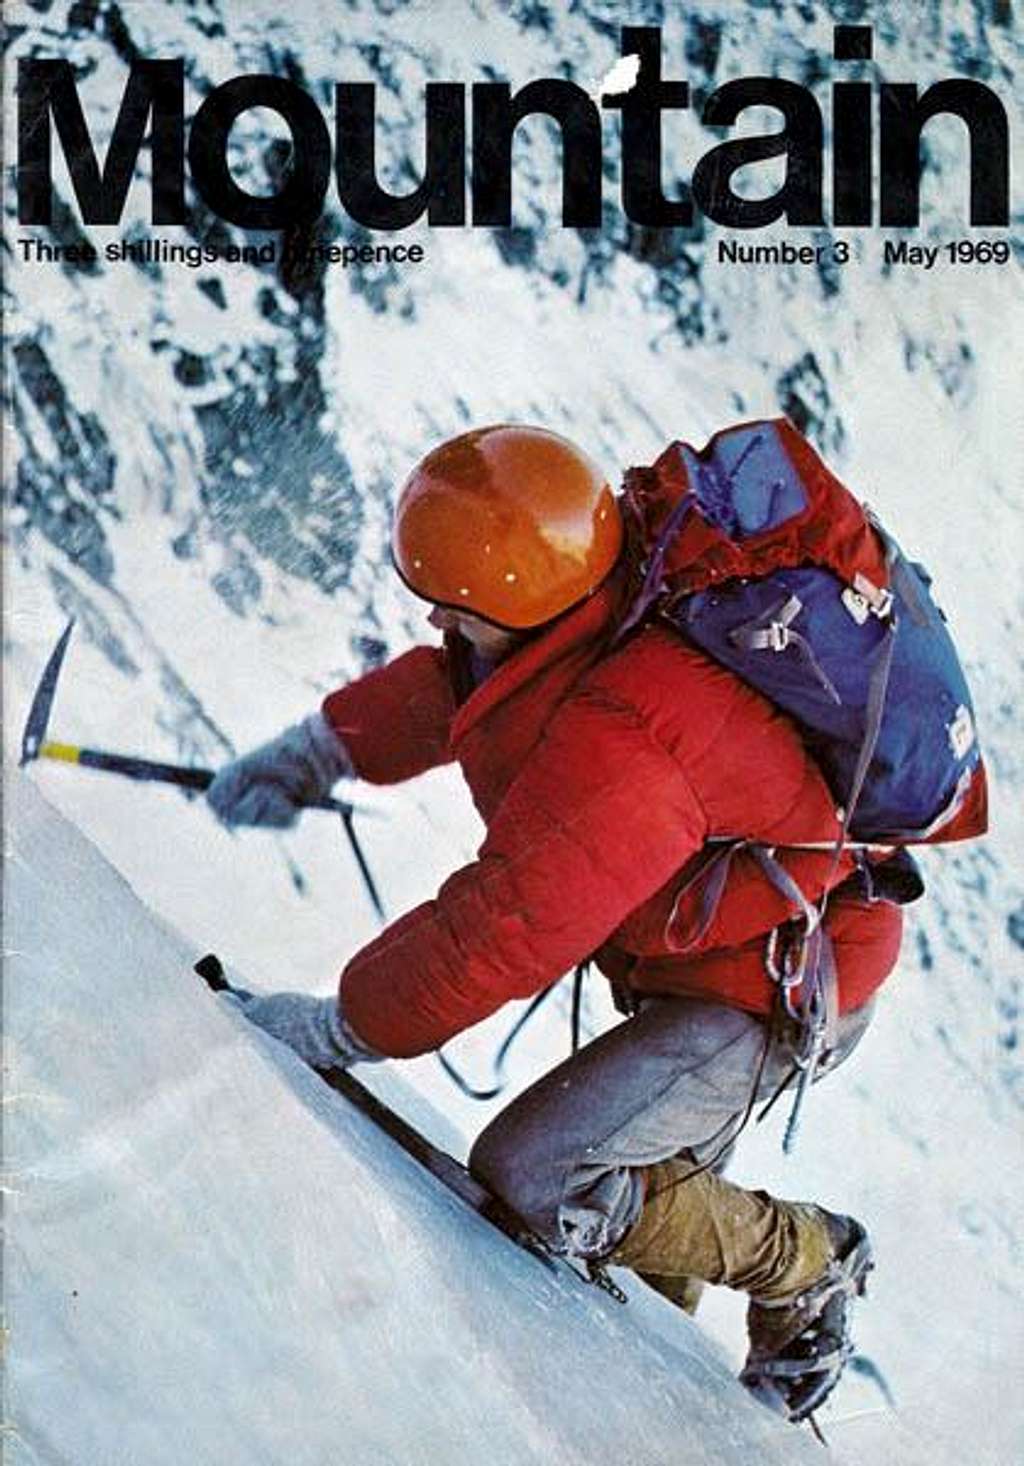 Mountain magazine #3, May 1969